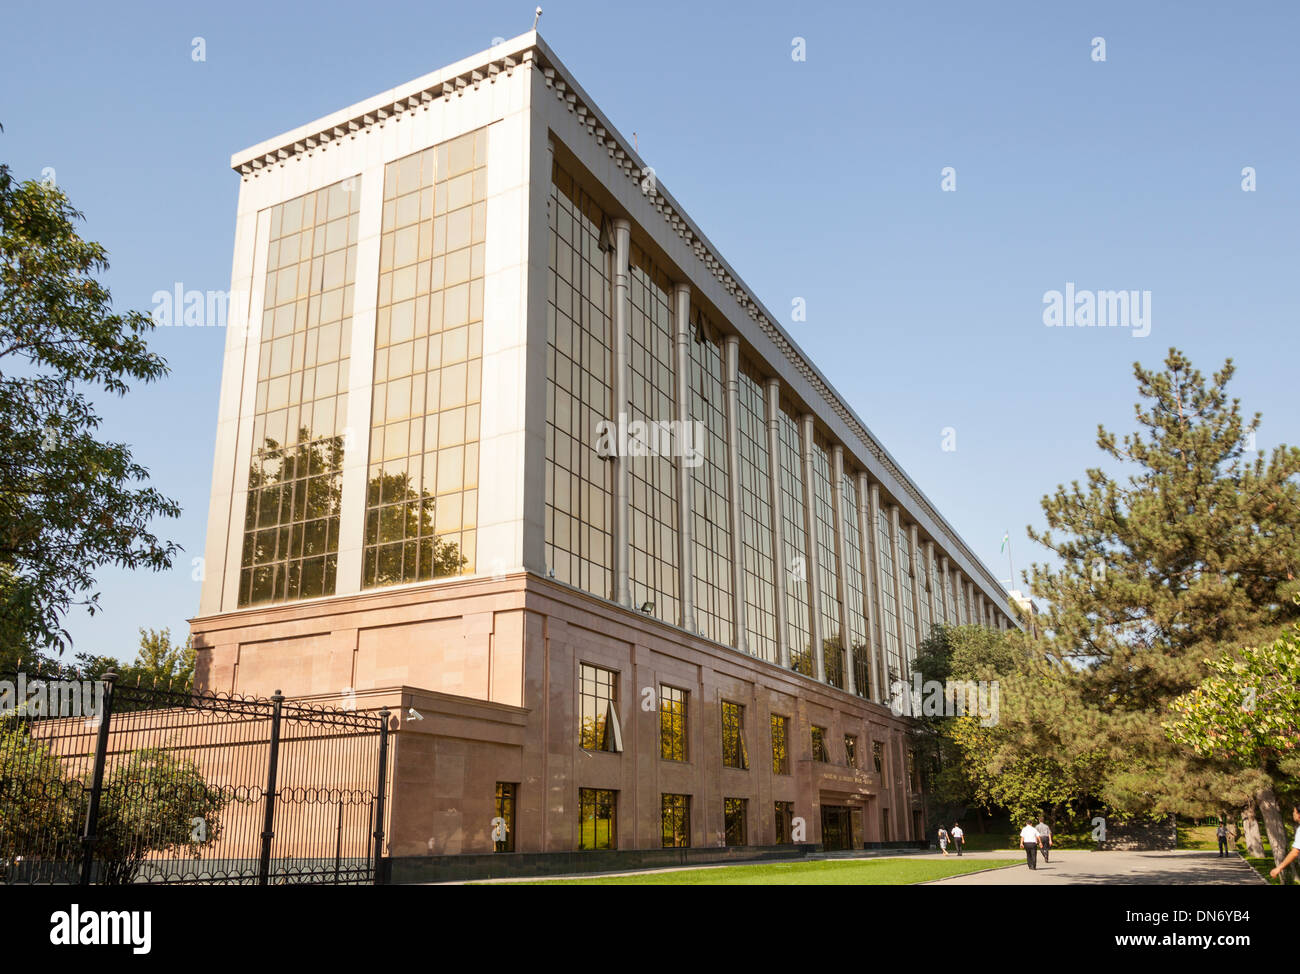 A government building, Parliament, Independence Square, Mustakillik Maydoni, Tashkent, Uzbekistan Stock Photo